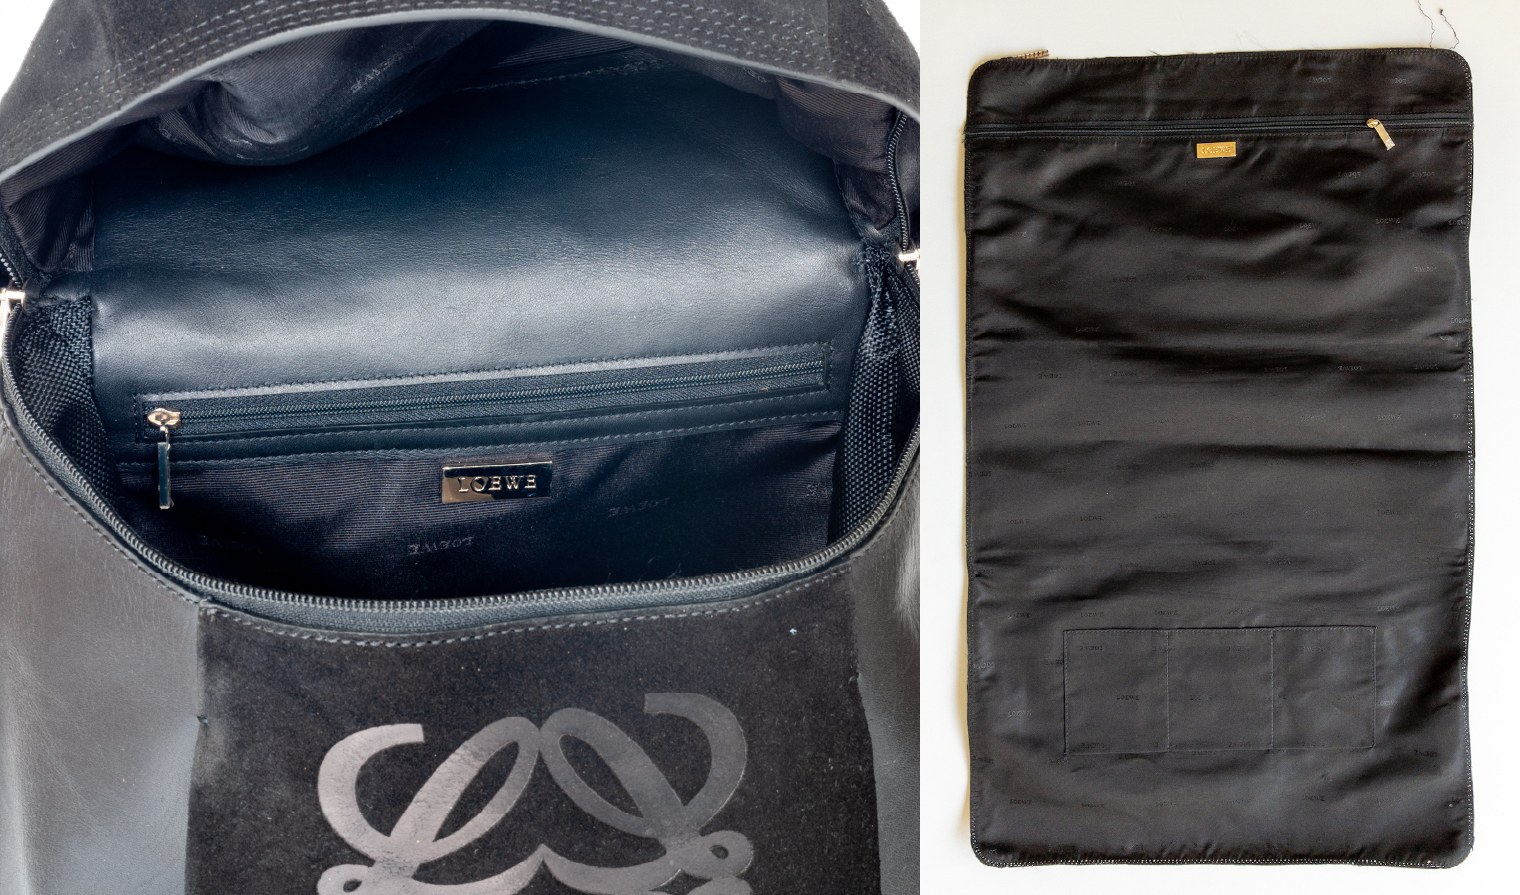 Loewe duffel 旅行包变成 T backpack 后背包